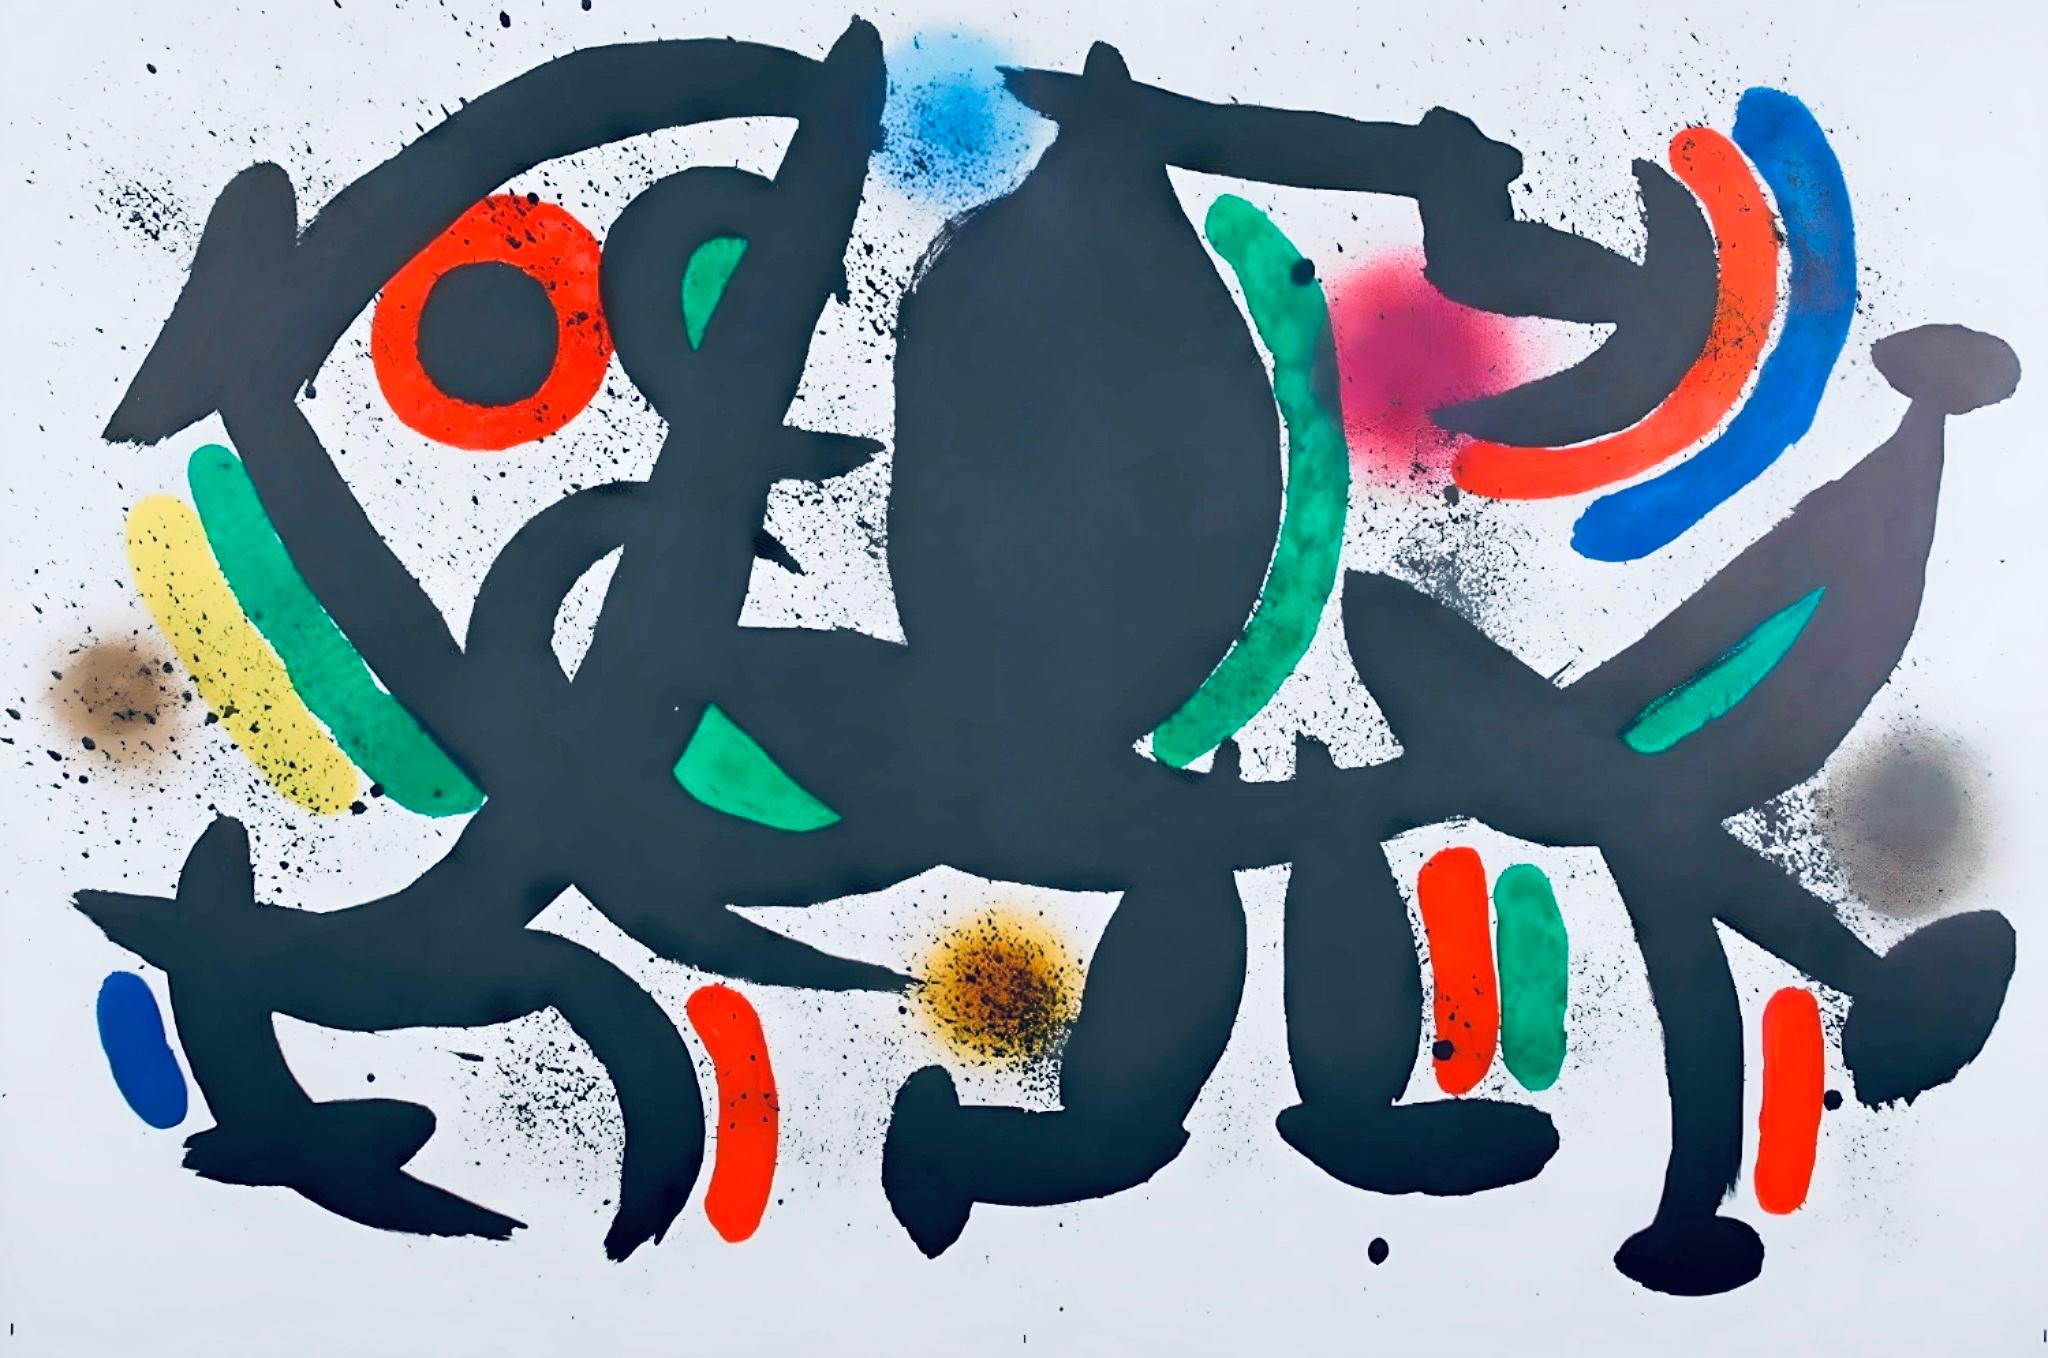 Abstract Print Joan Miró - Miro, Composition (Cramer 160 ; Mourlot 864), 1972 (après)